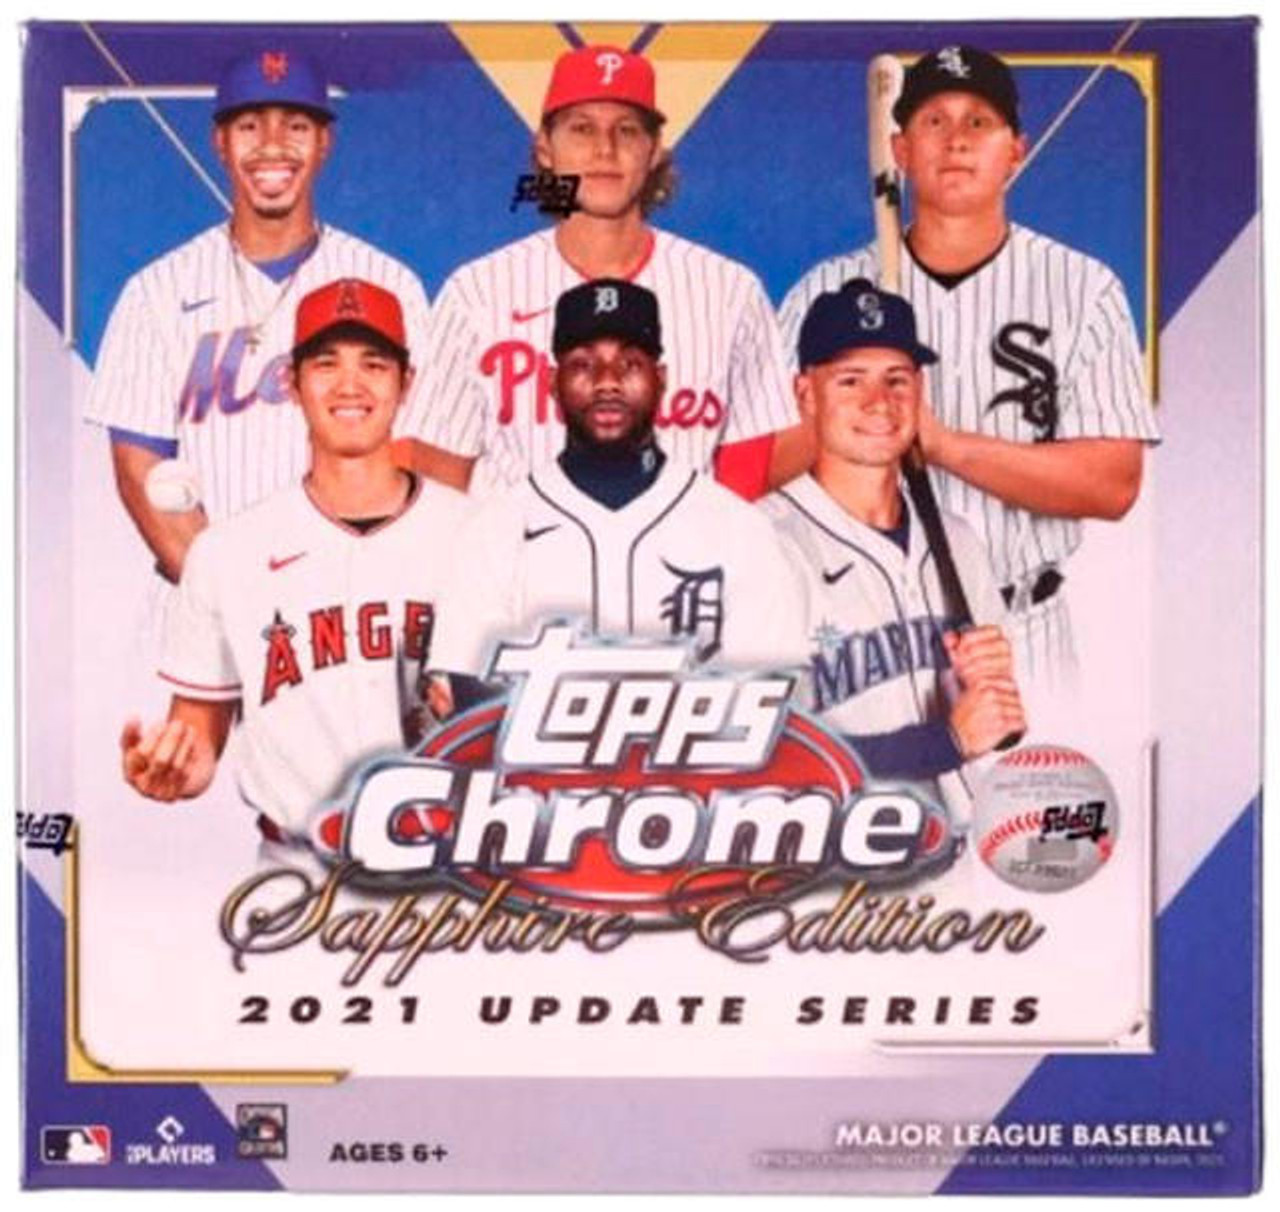 2021 Topps Chrome Update Series Baseball Sapphire Edition Box